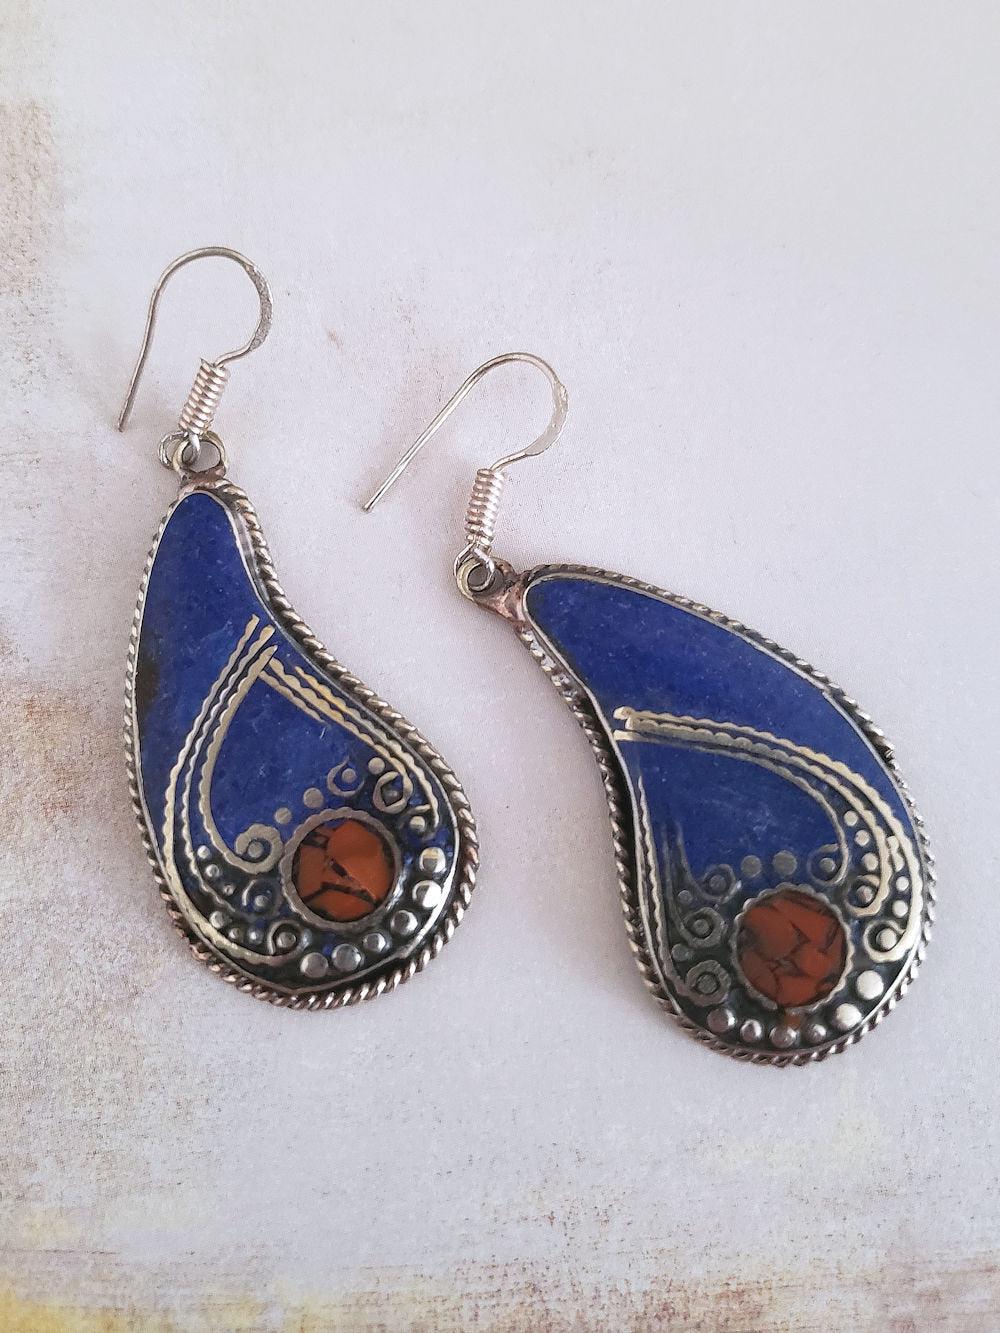 Tibetan Earrings - Lapis or Turquoise Paisleys  Summer Indigo 